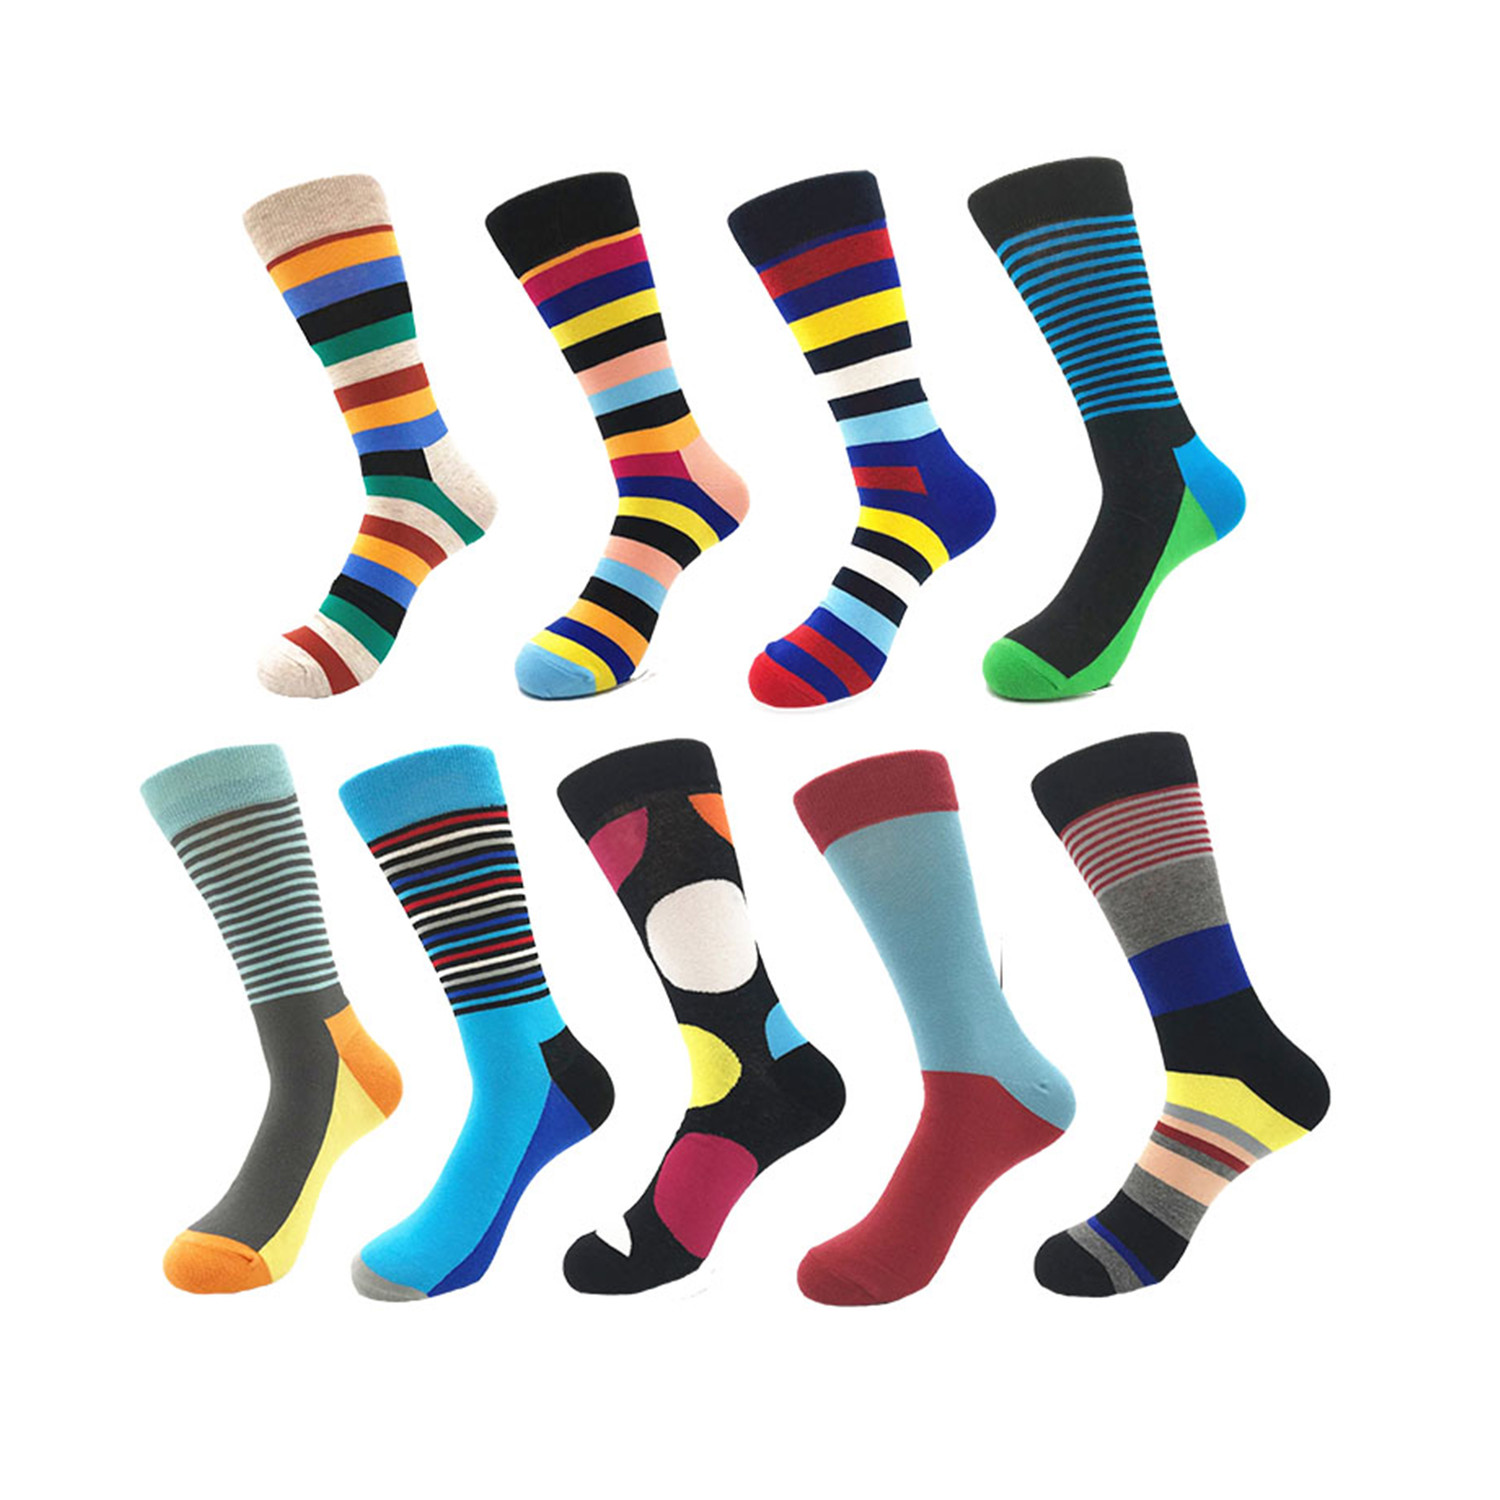 Assorted Soft Cotton Socks Bundle 14 // Multicolor // Pack of 9 ...